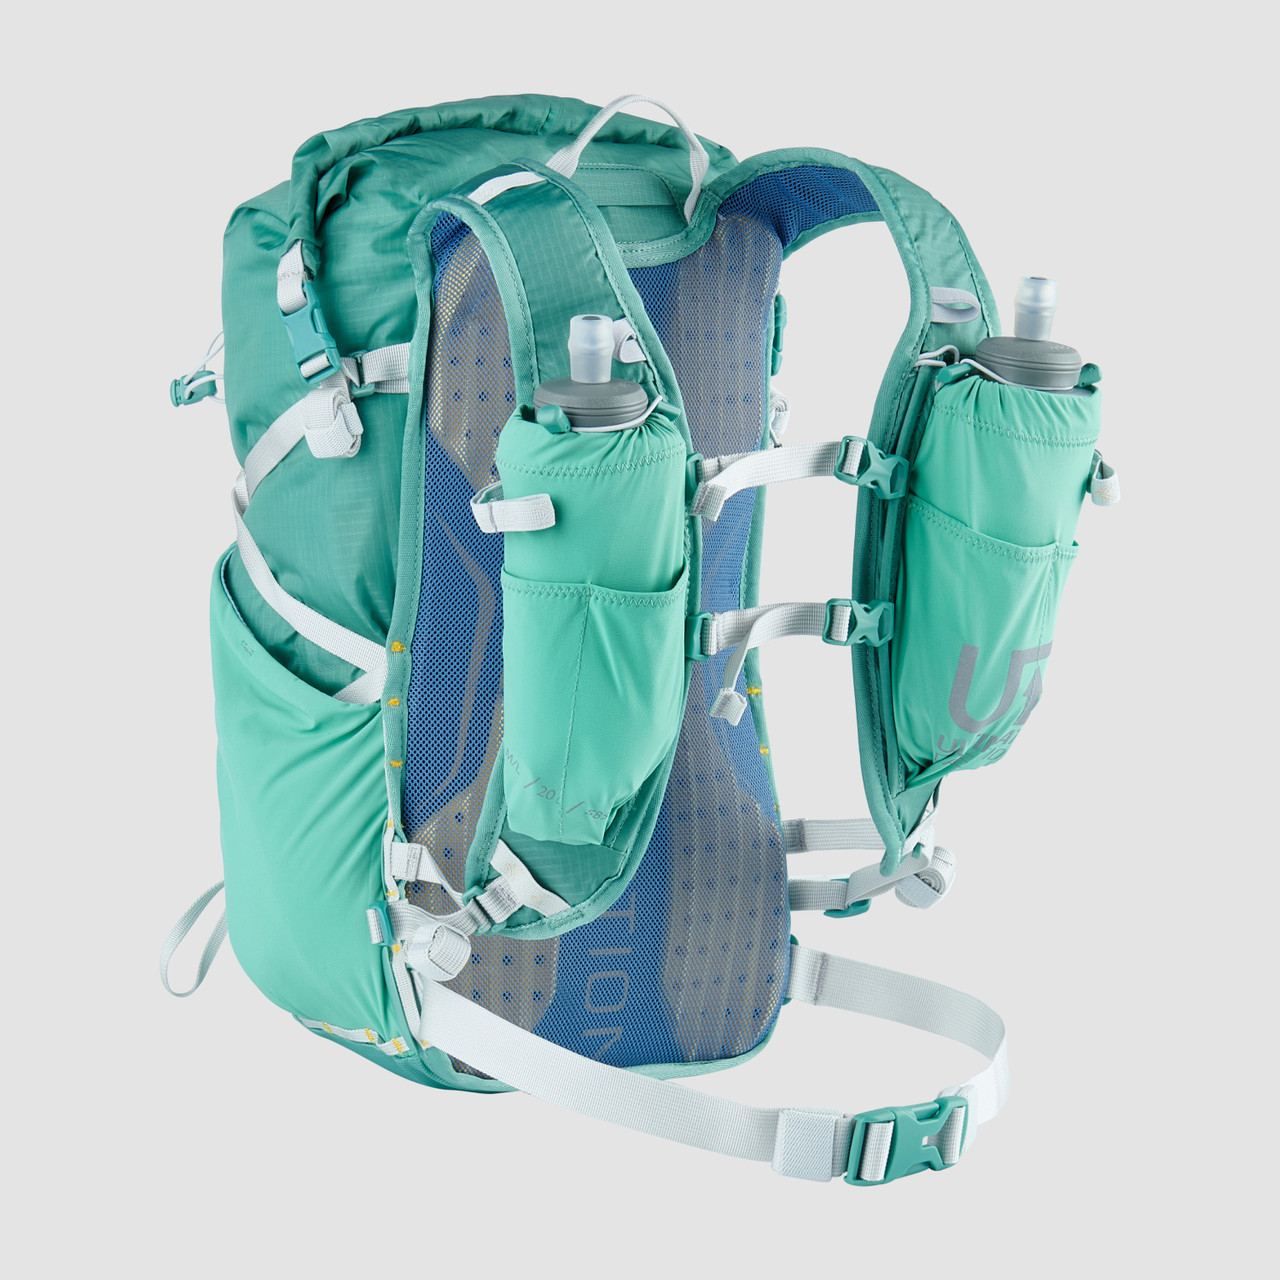 Ultimate Travel Bag 2.0 Project Kit – SewBatik